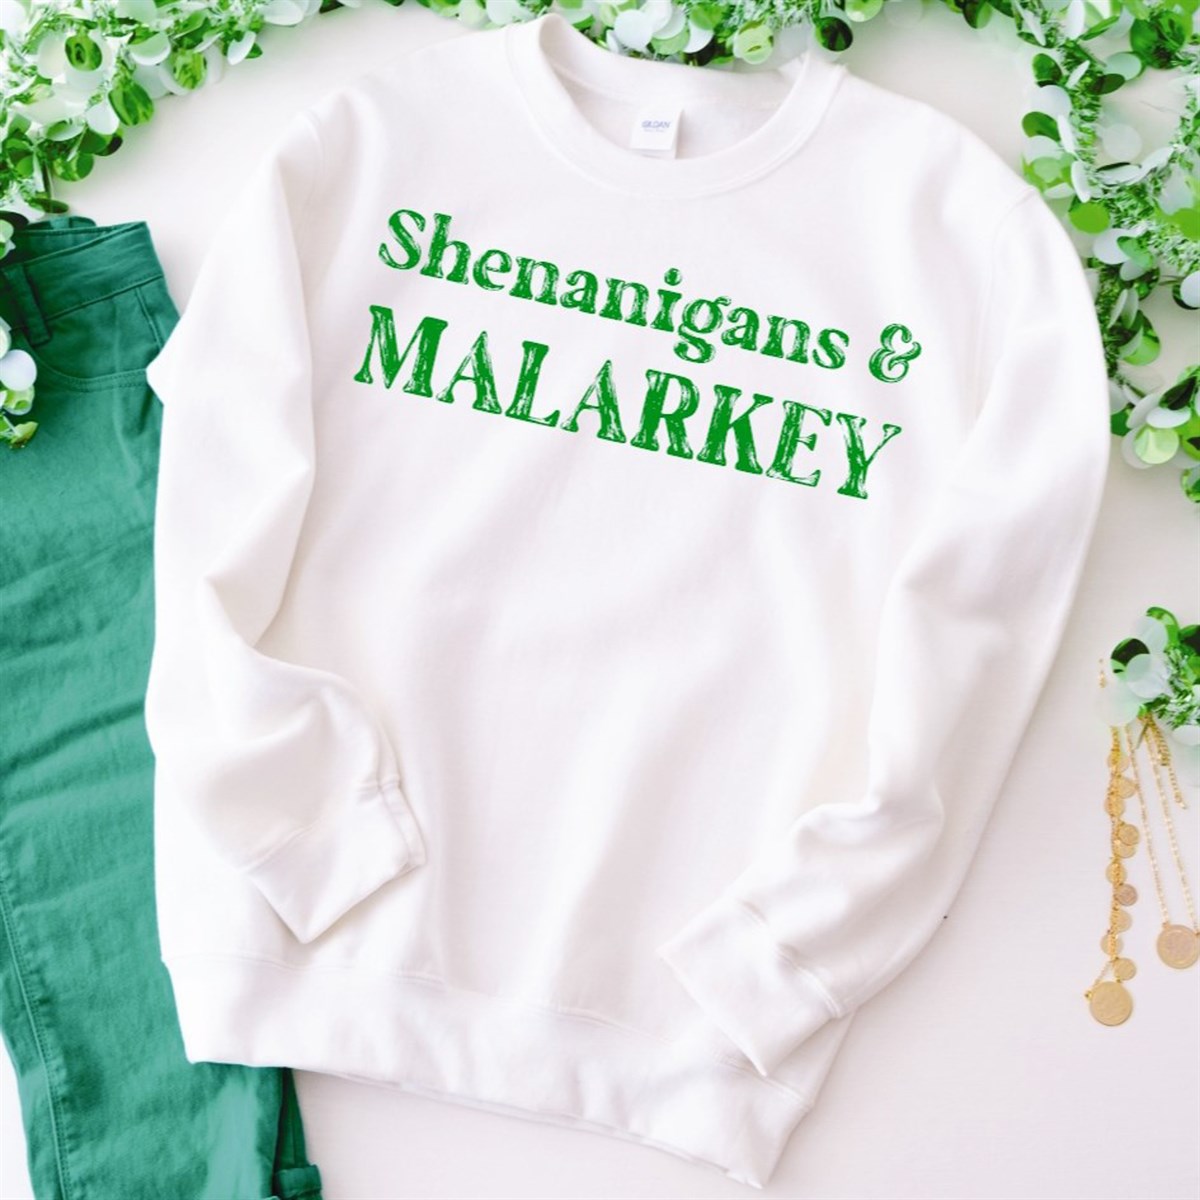 Shenanigans & Malarkey Crew Sweatshirt